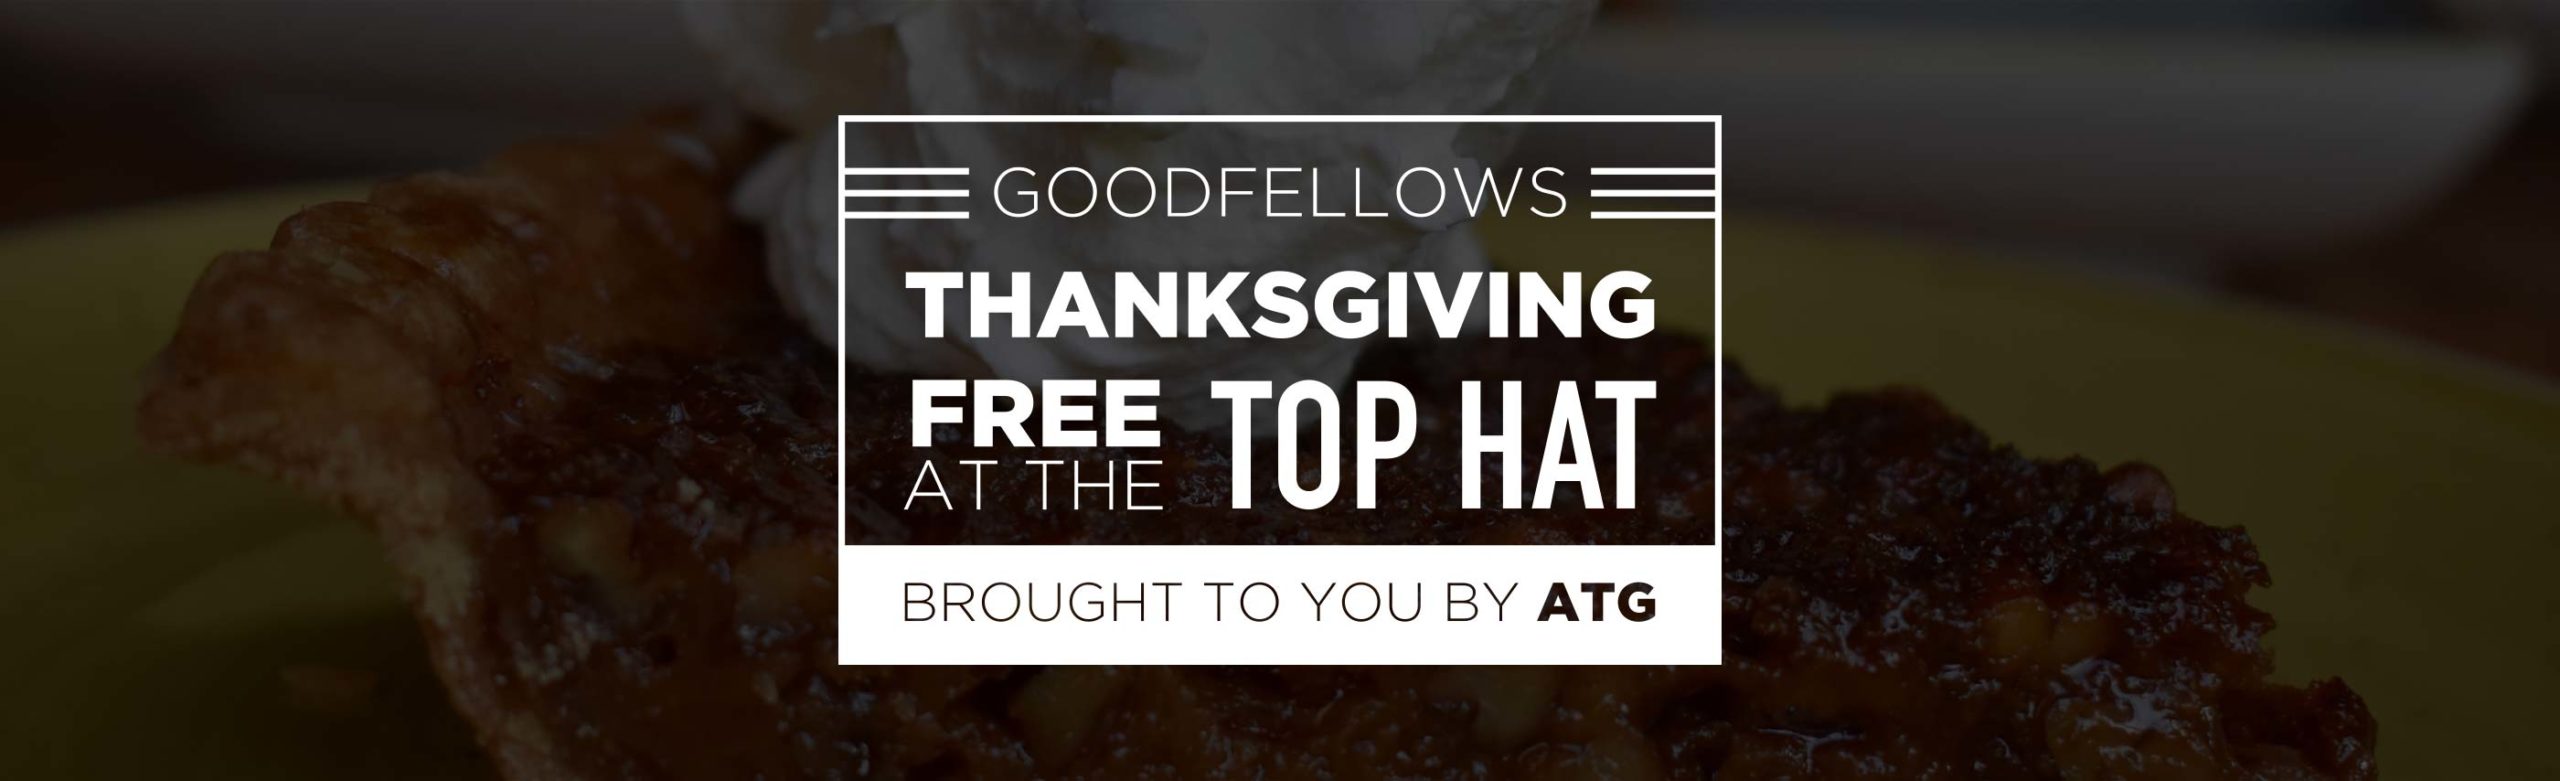 Goodfellows Thanksgiving